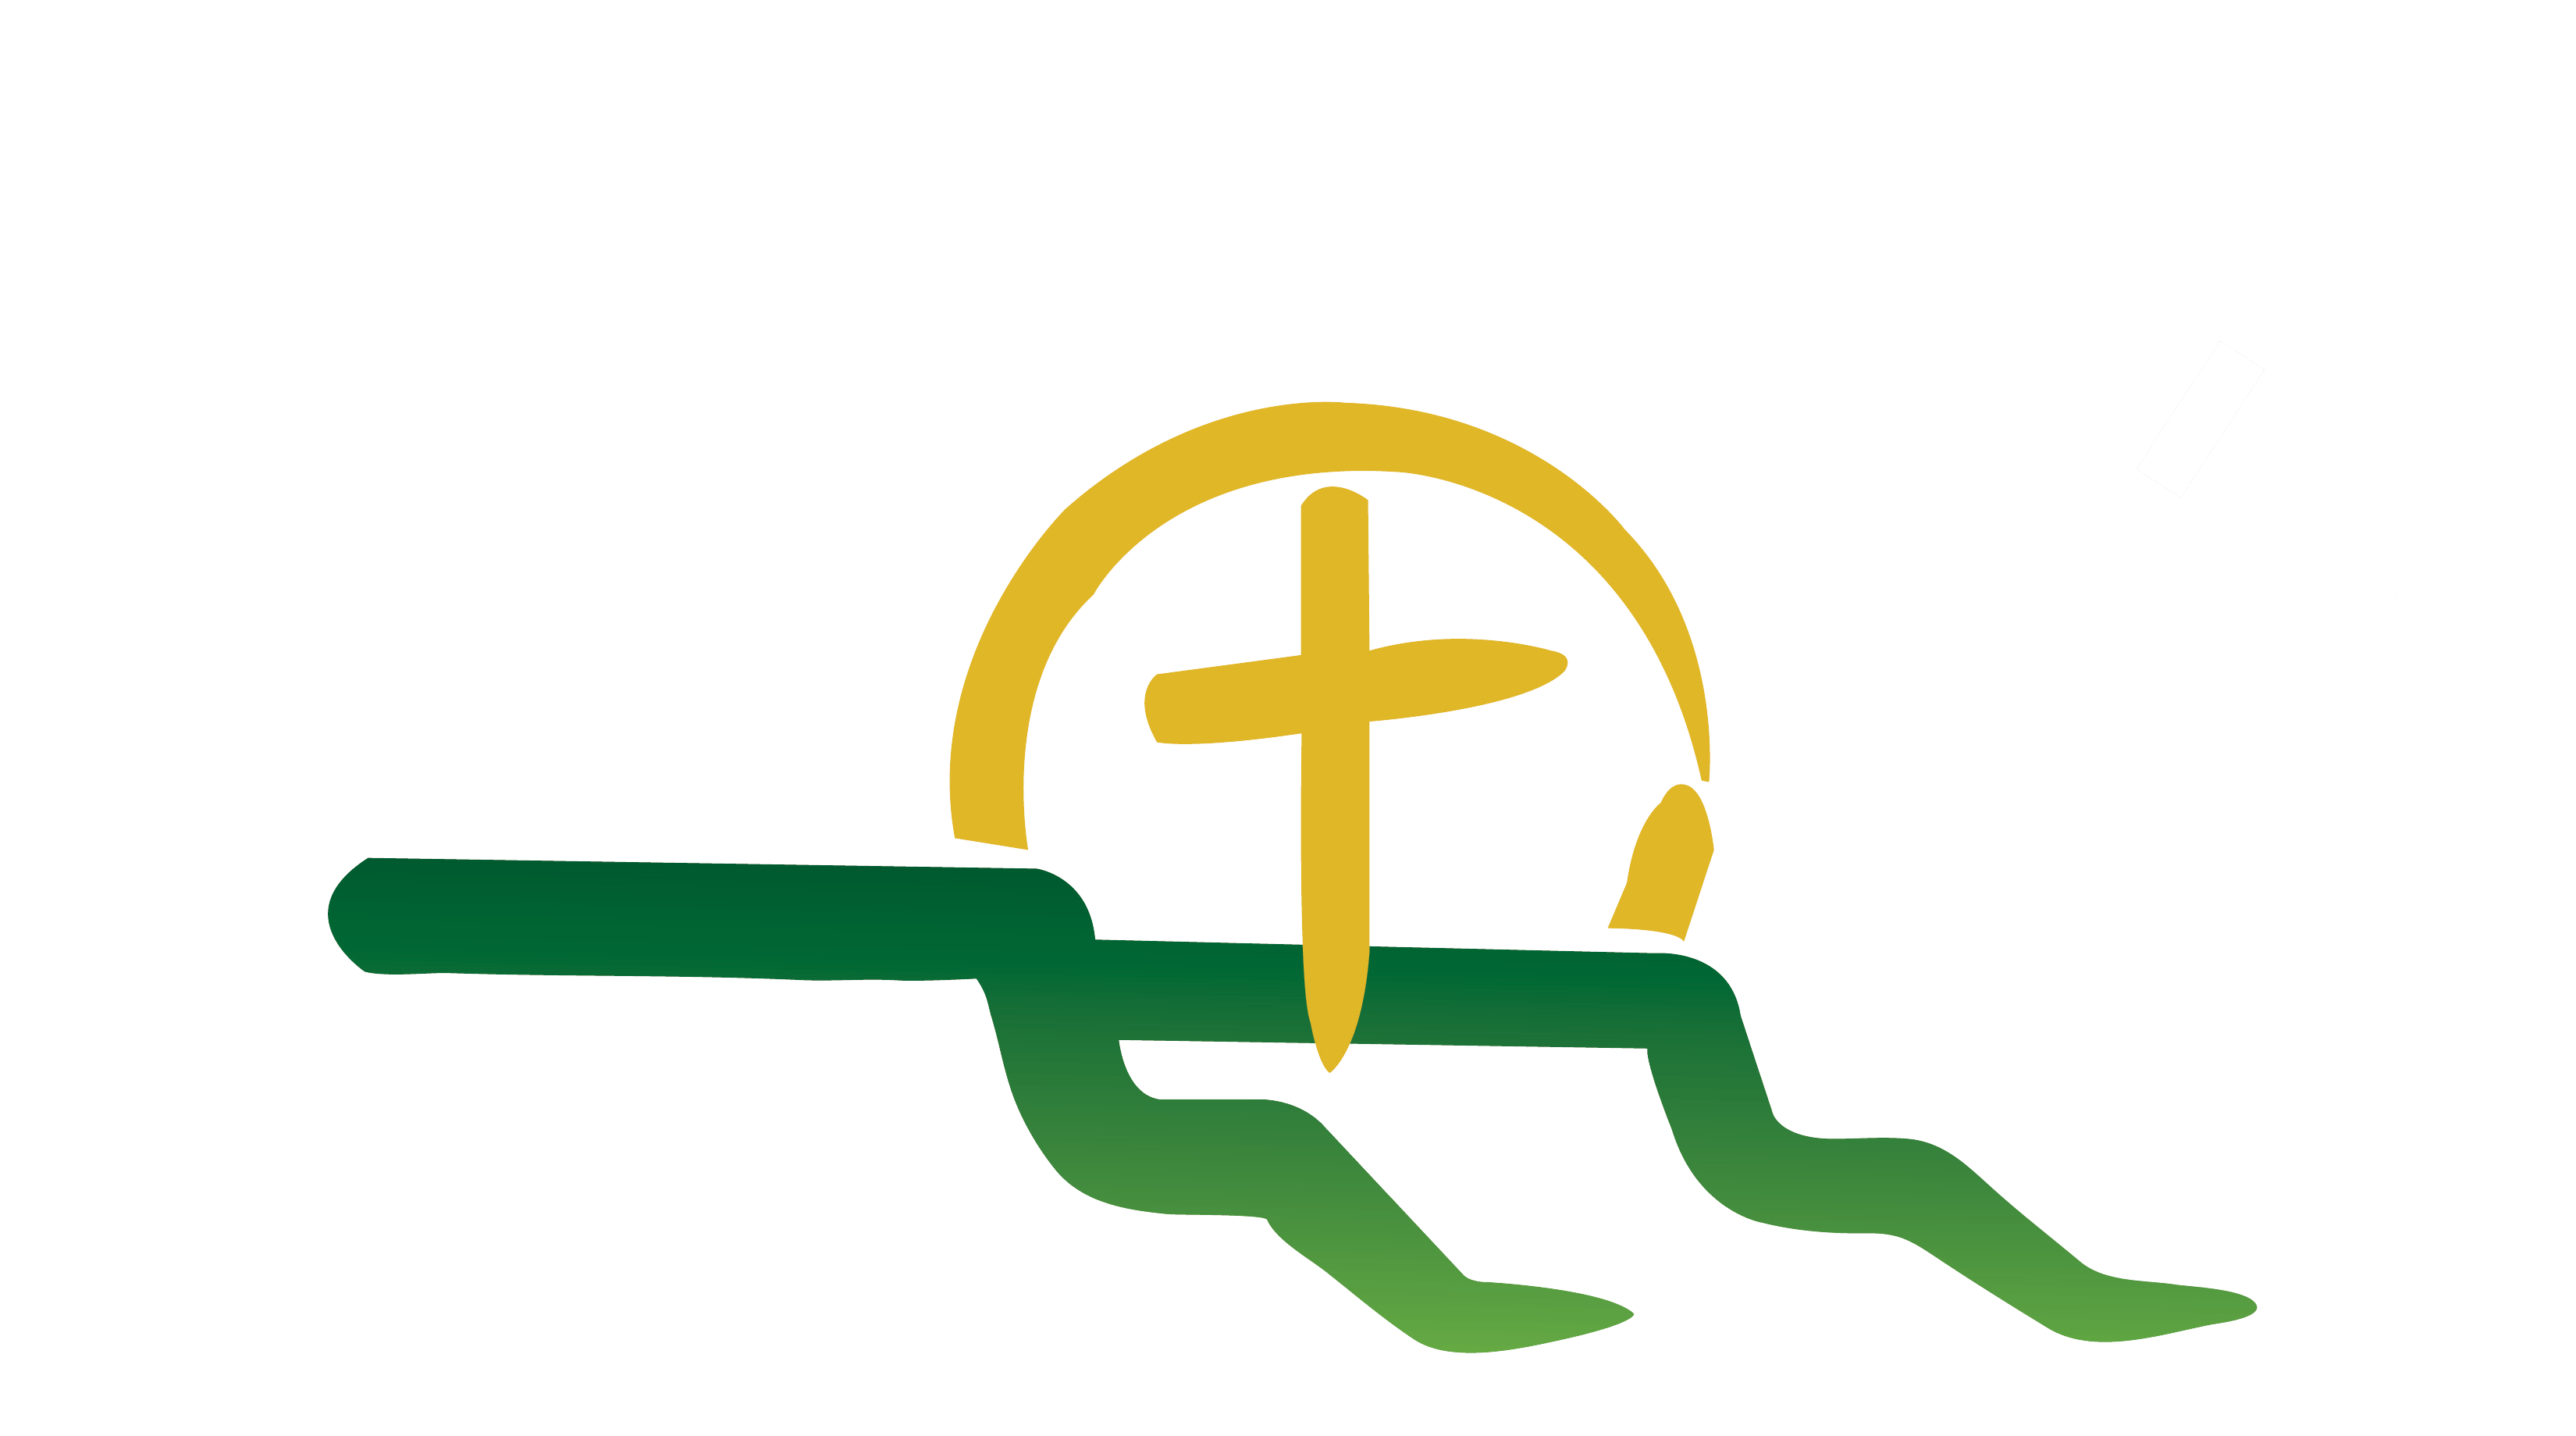 Christian Camp Logo - Ceta Canyon. Christian Camp And Retreat Center